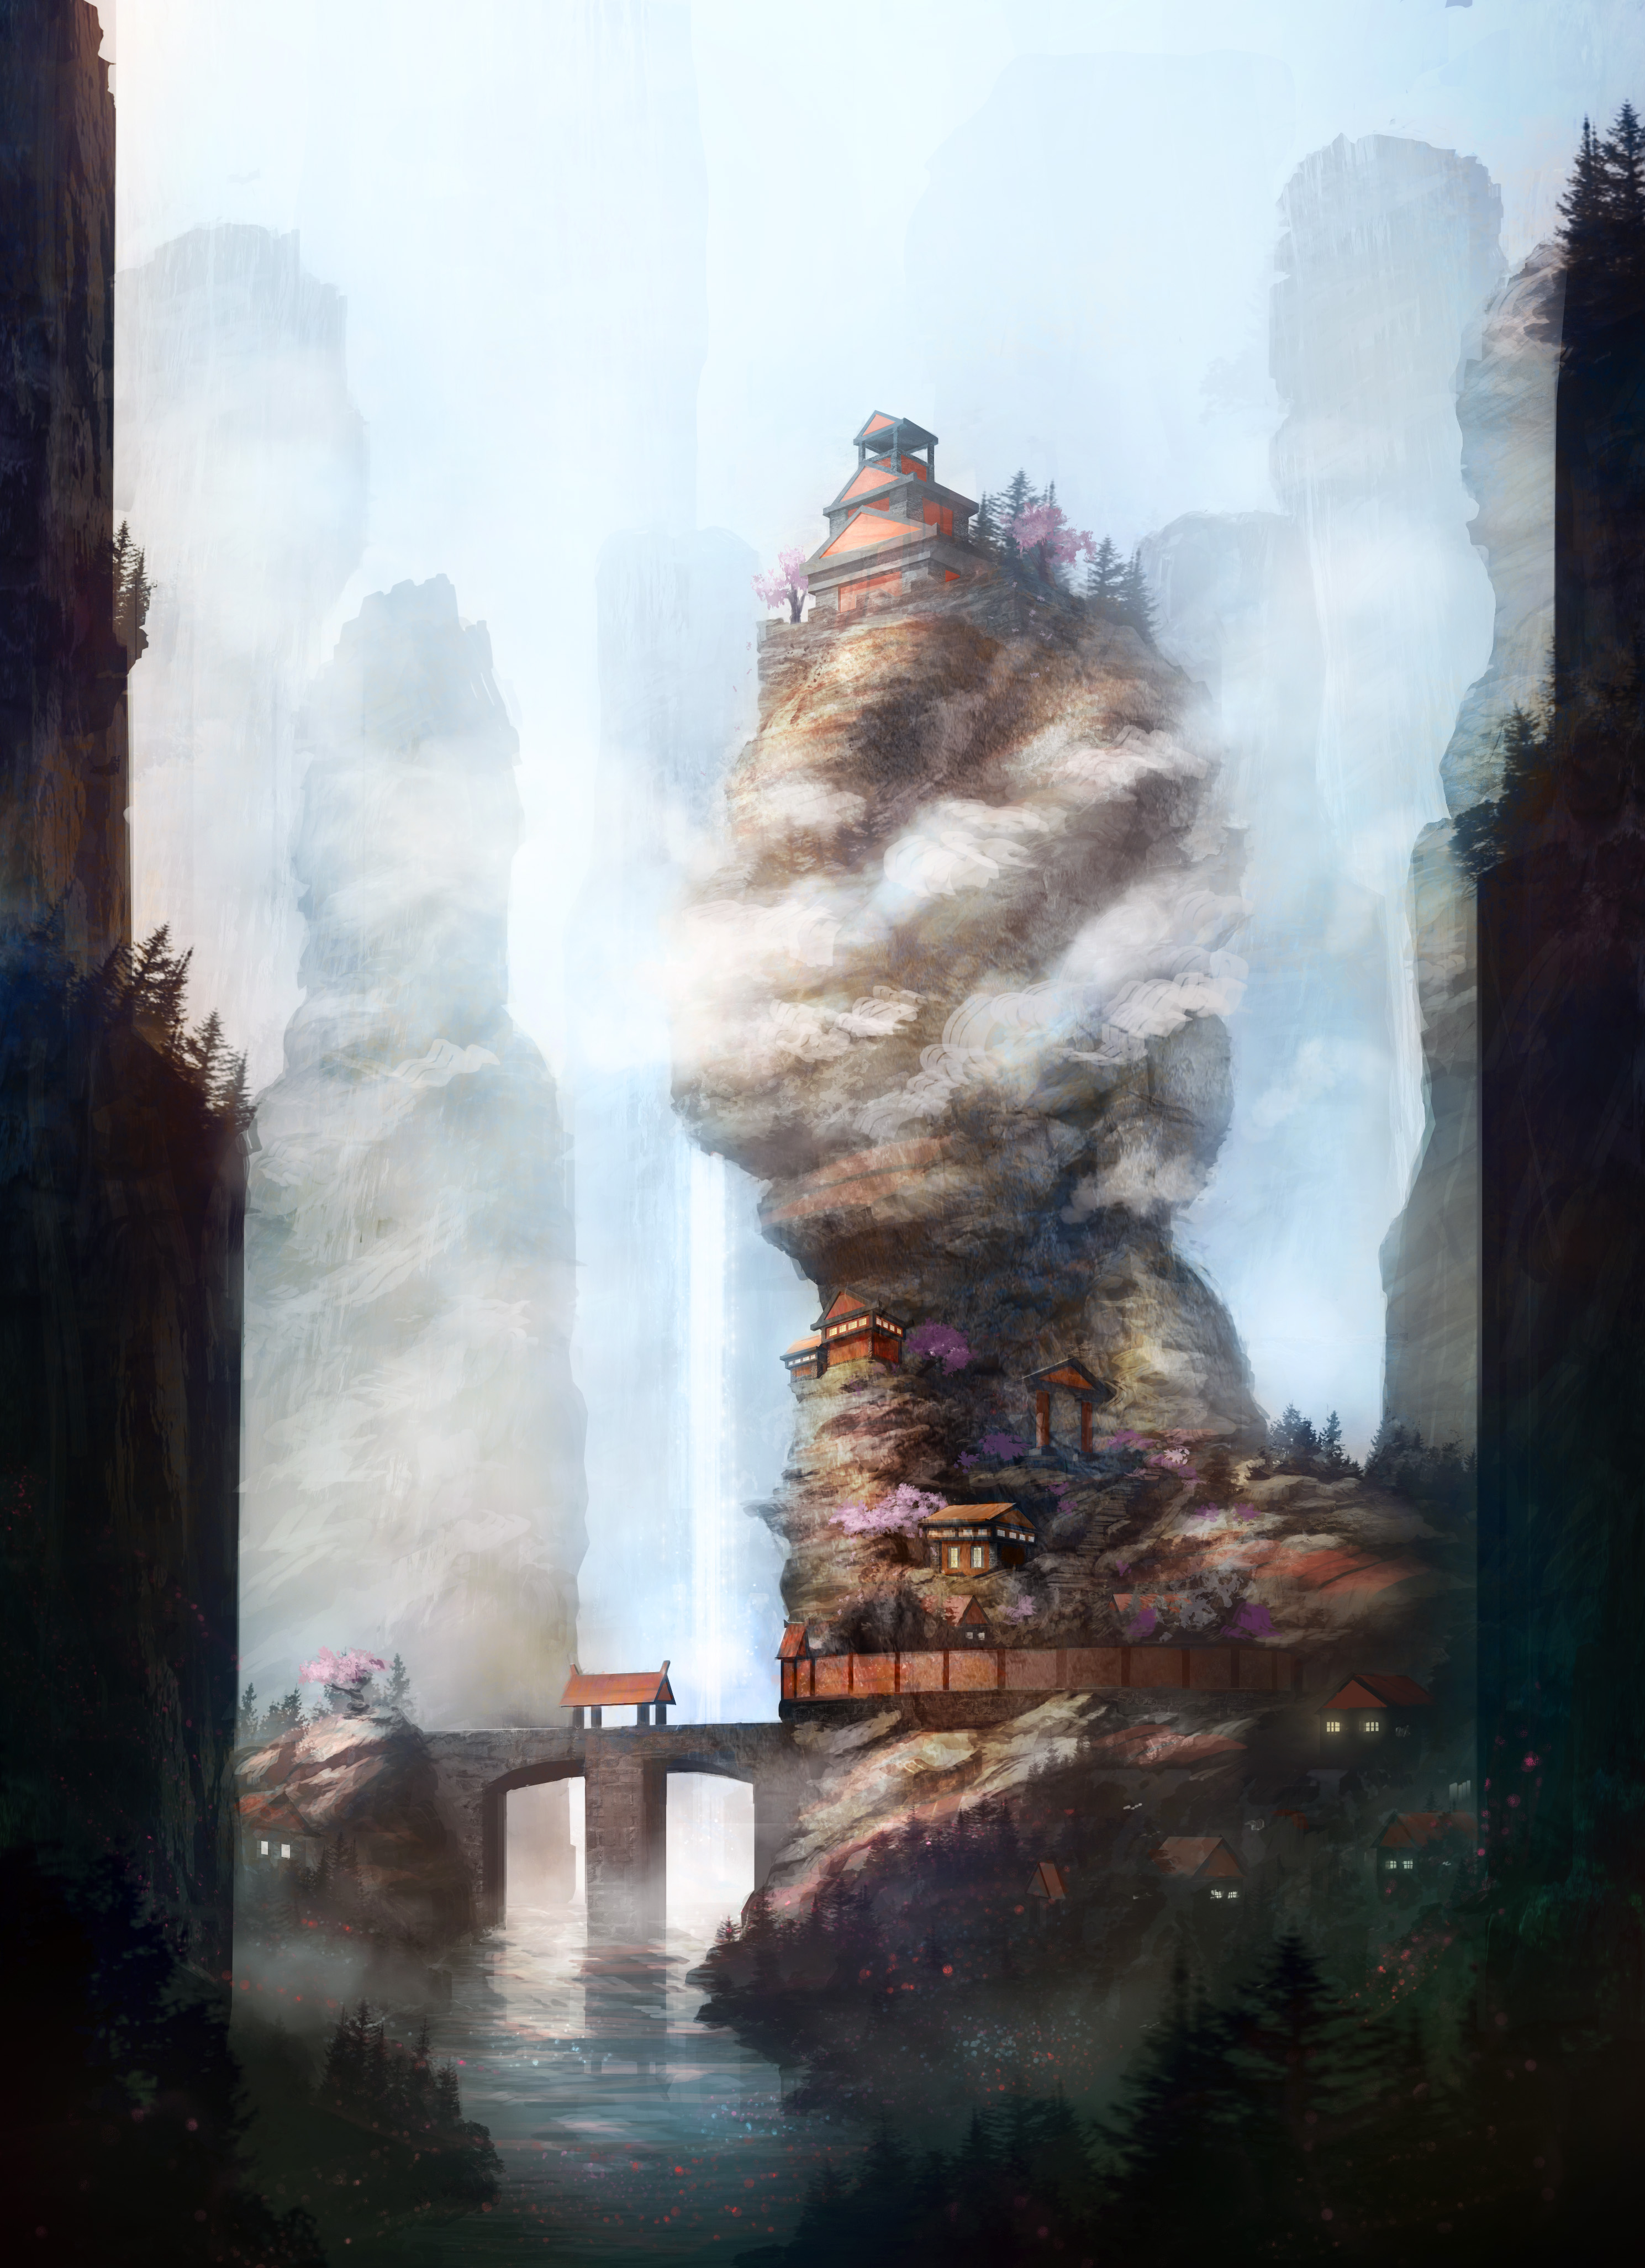 Скачать обои бесплатно Туман, Скалы, Мост, Пагода, Арт картинка на рабочий стол ПК